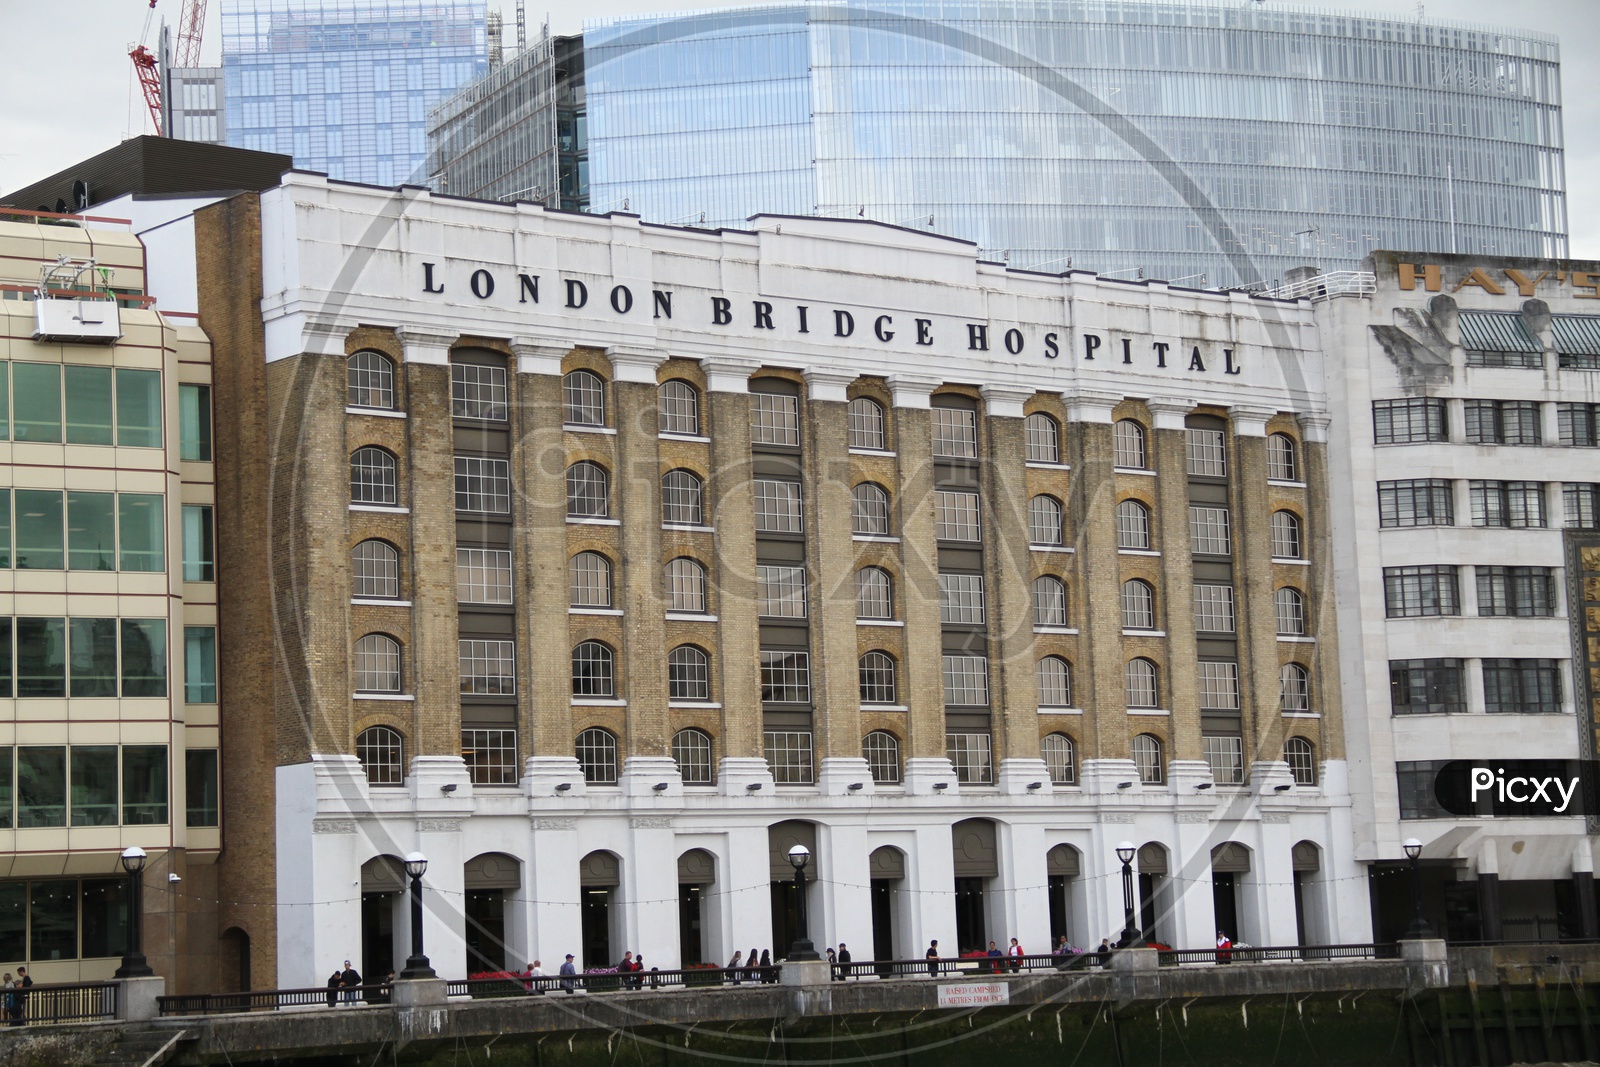 London Bridge Hospital near Thames River